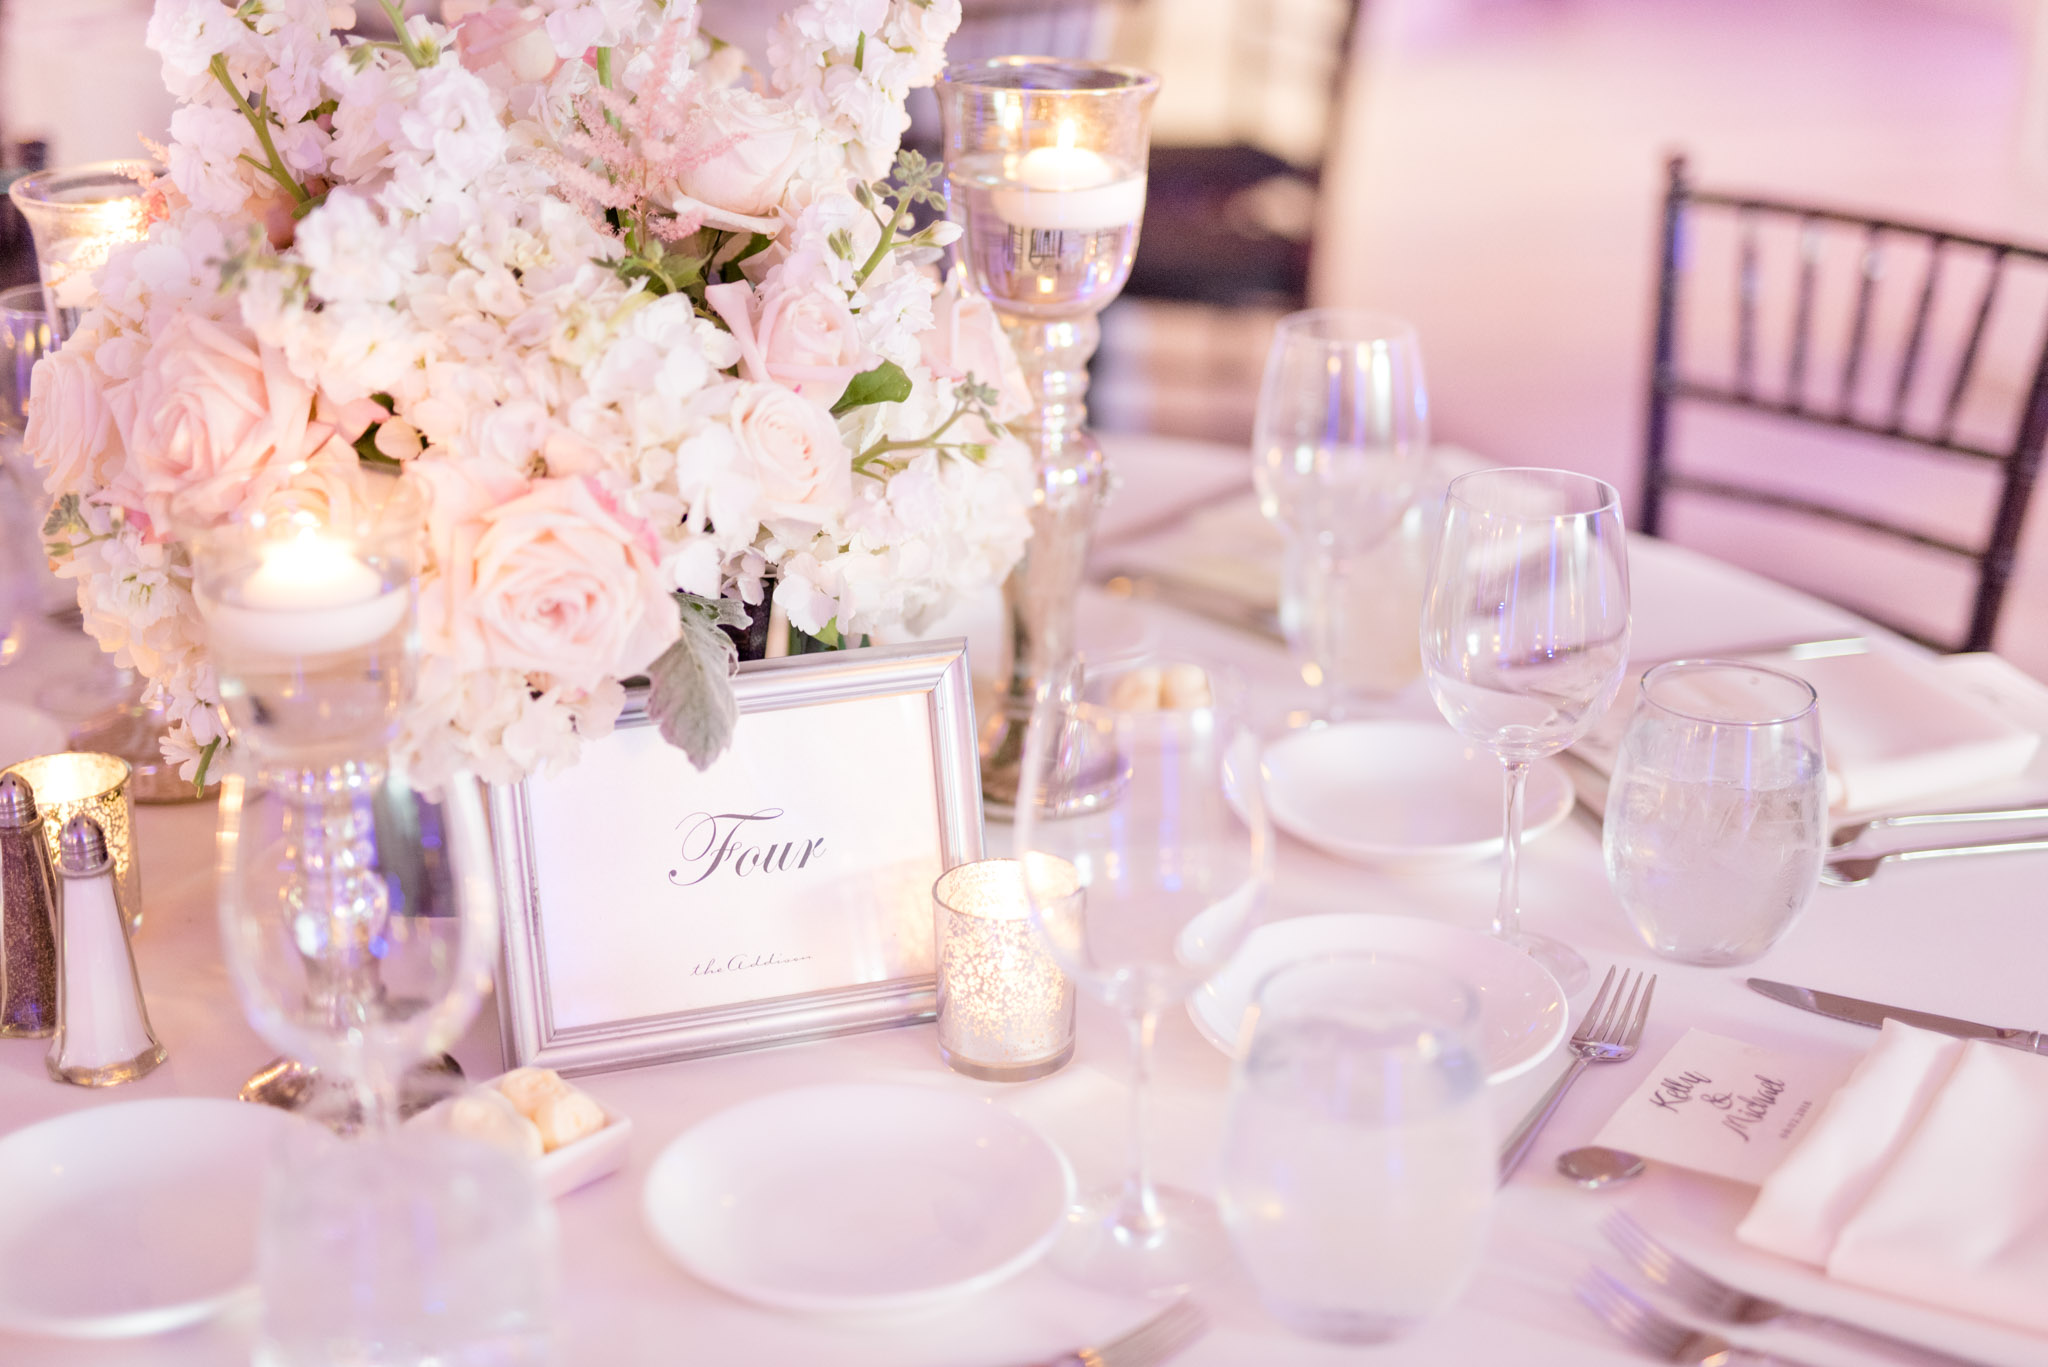 Table decor for wedding reception.